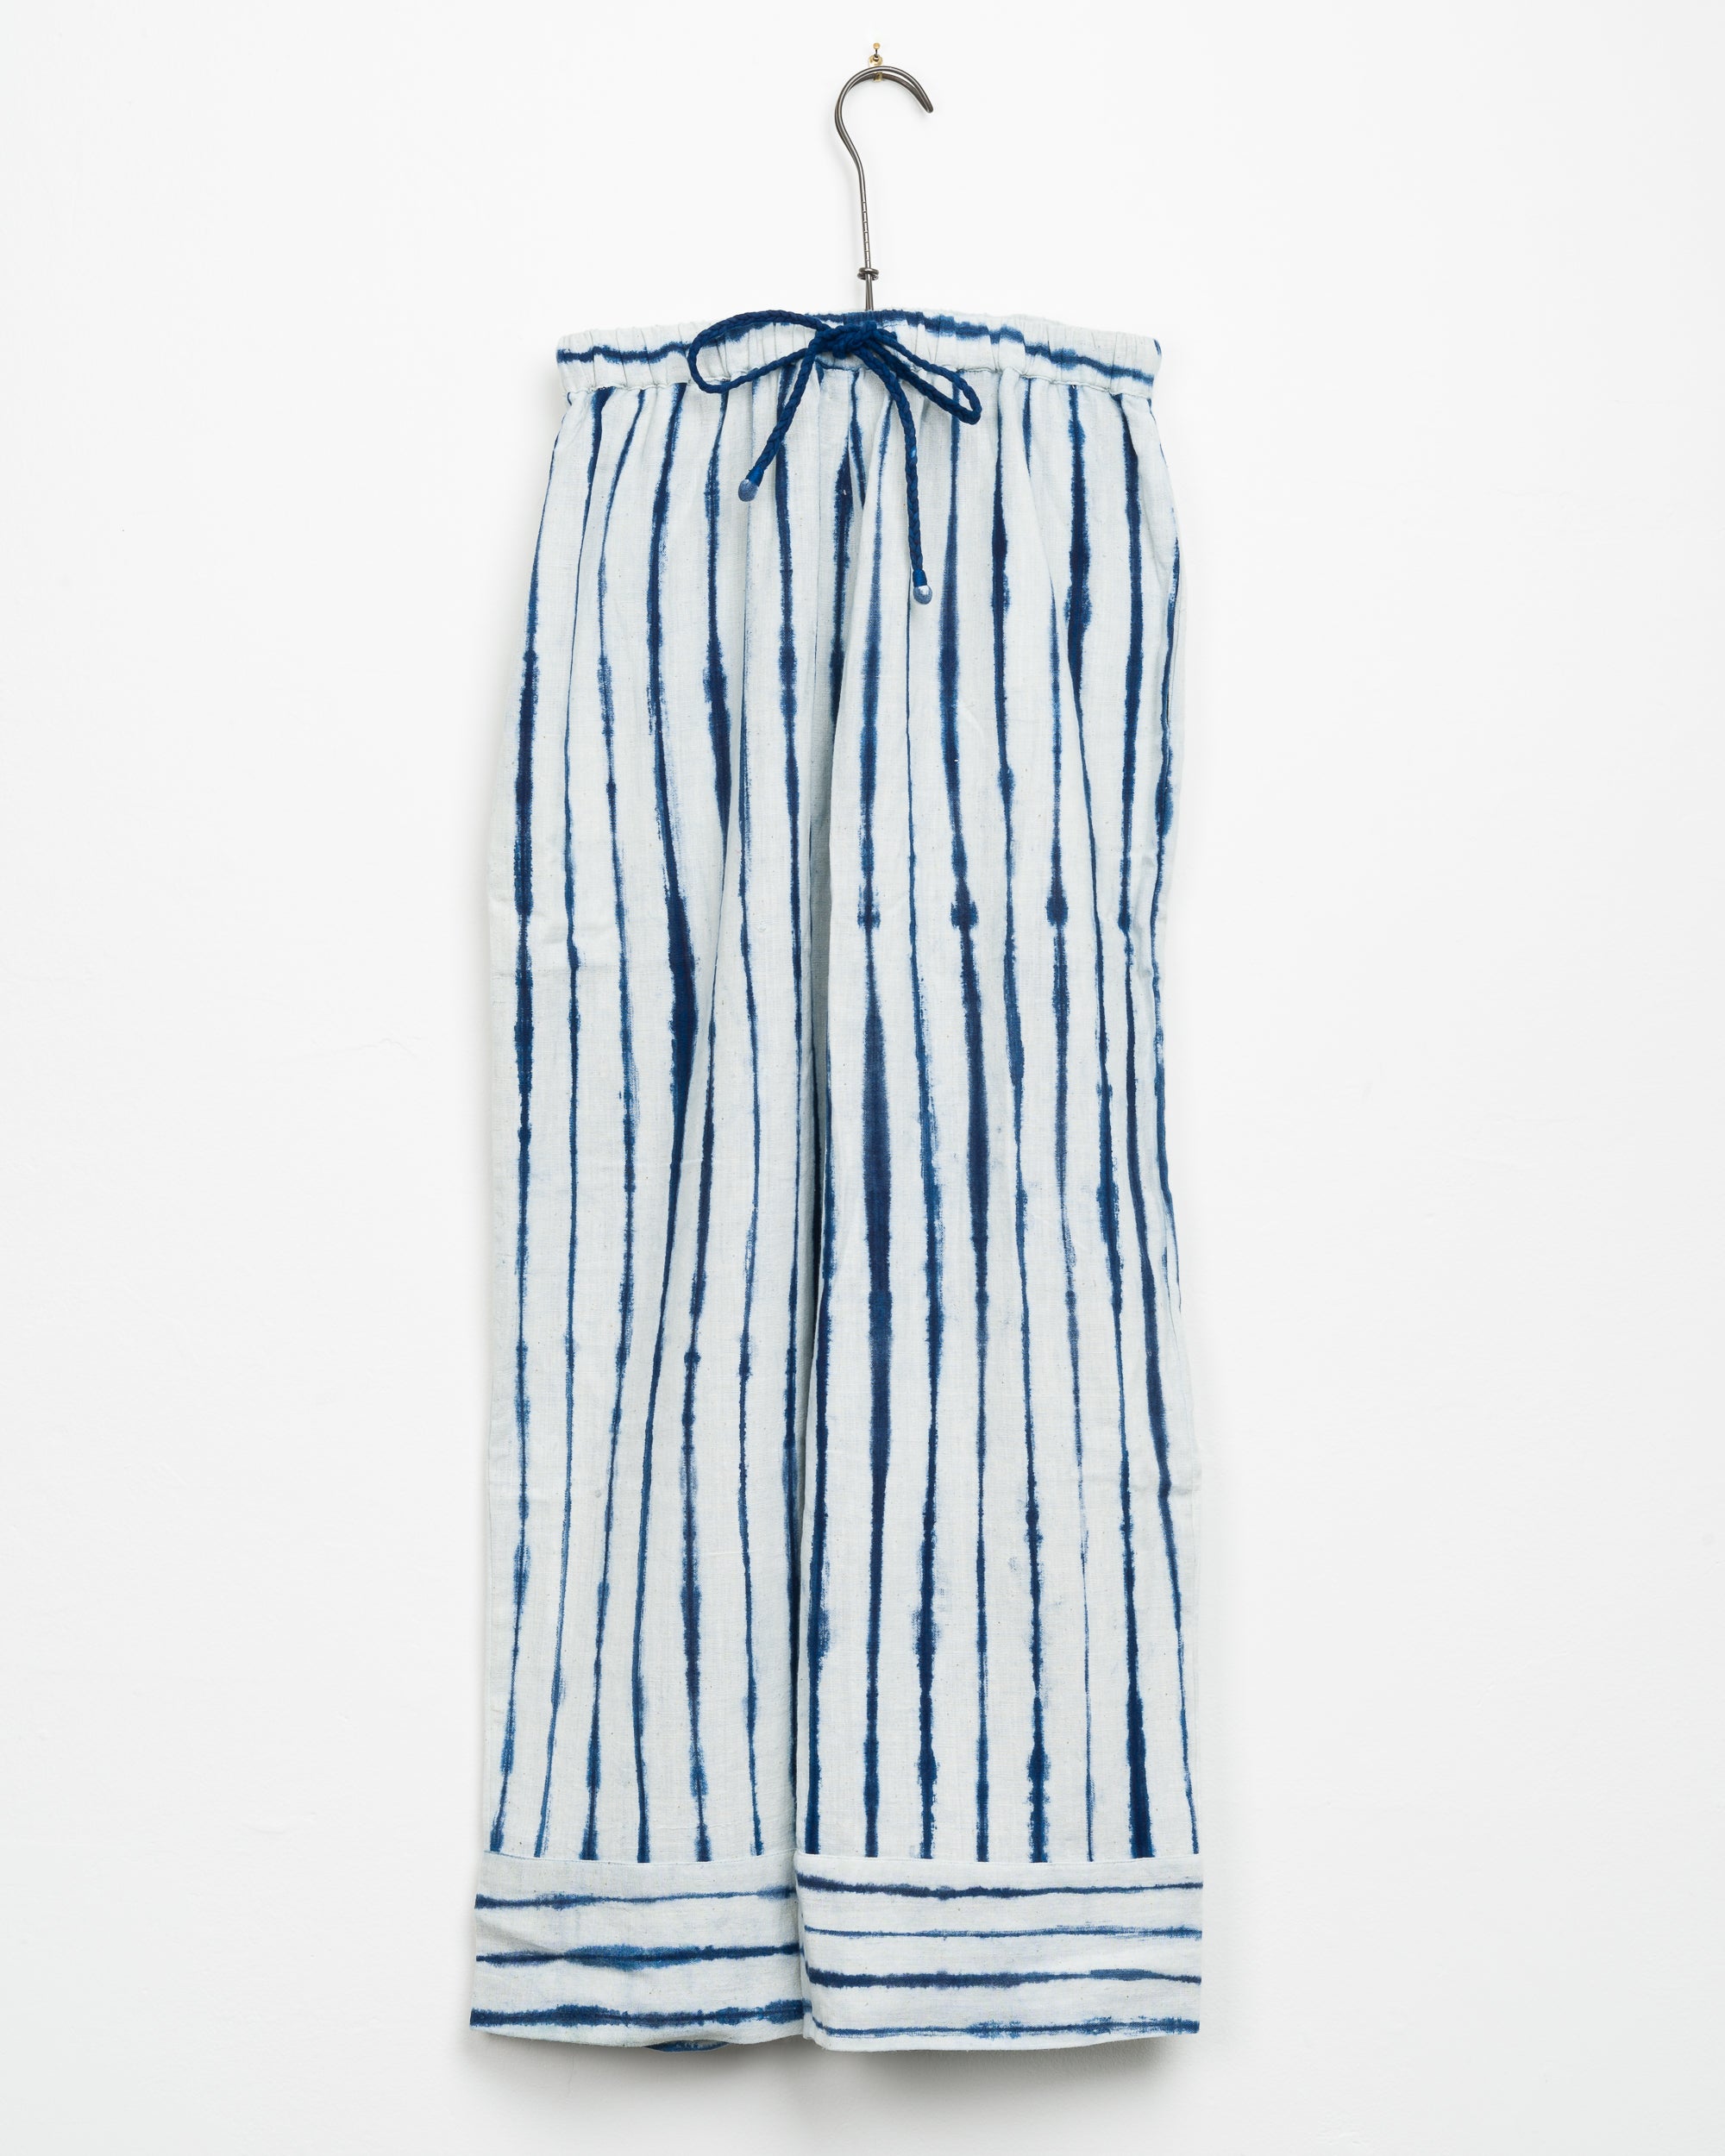 Garima Pant in Natural Stripe Shibori